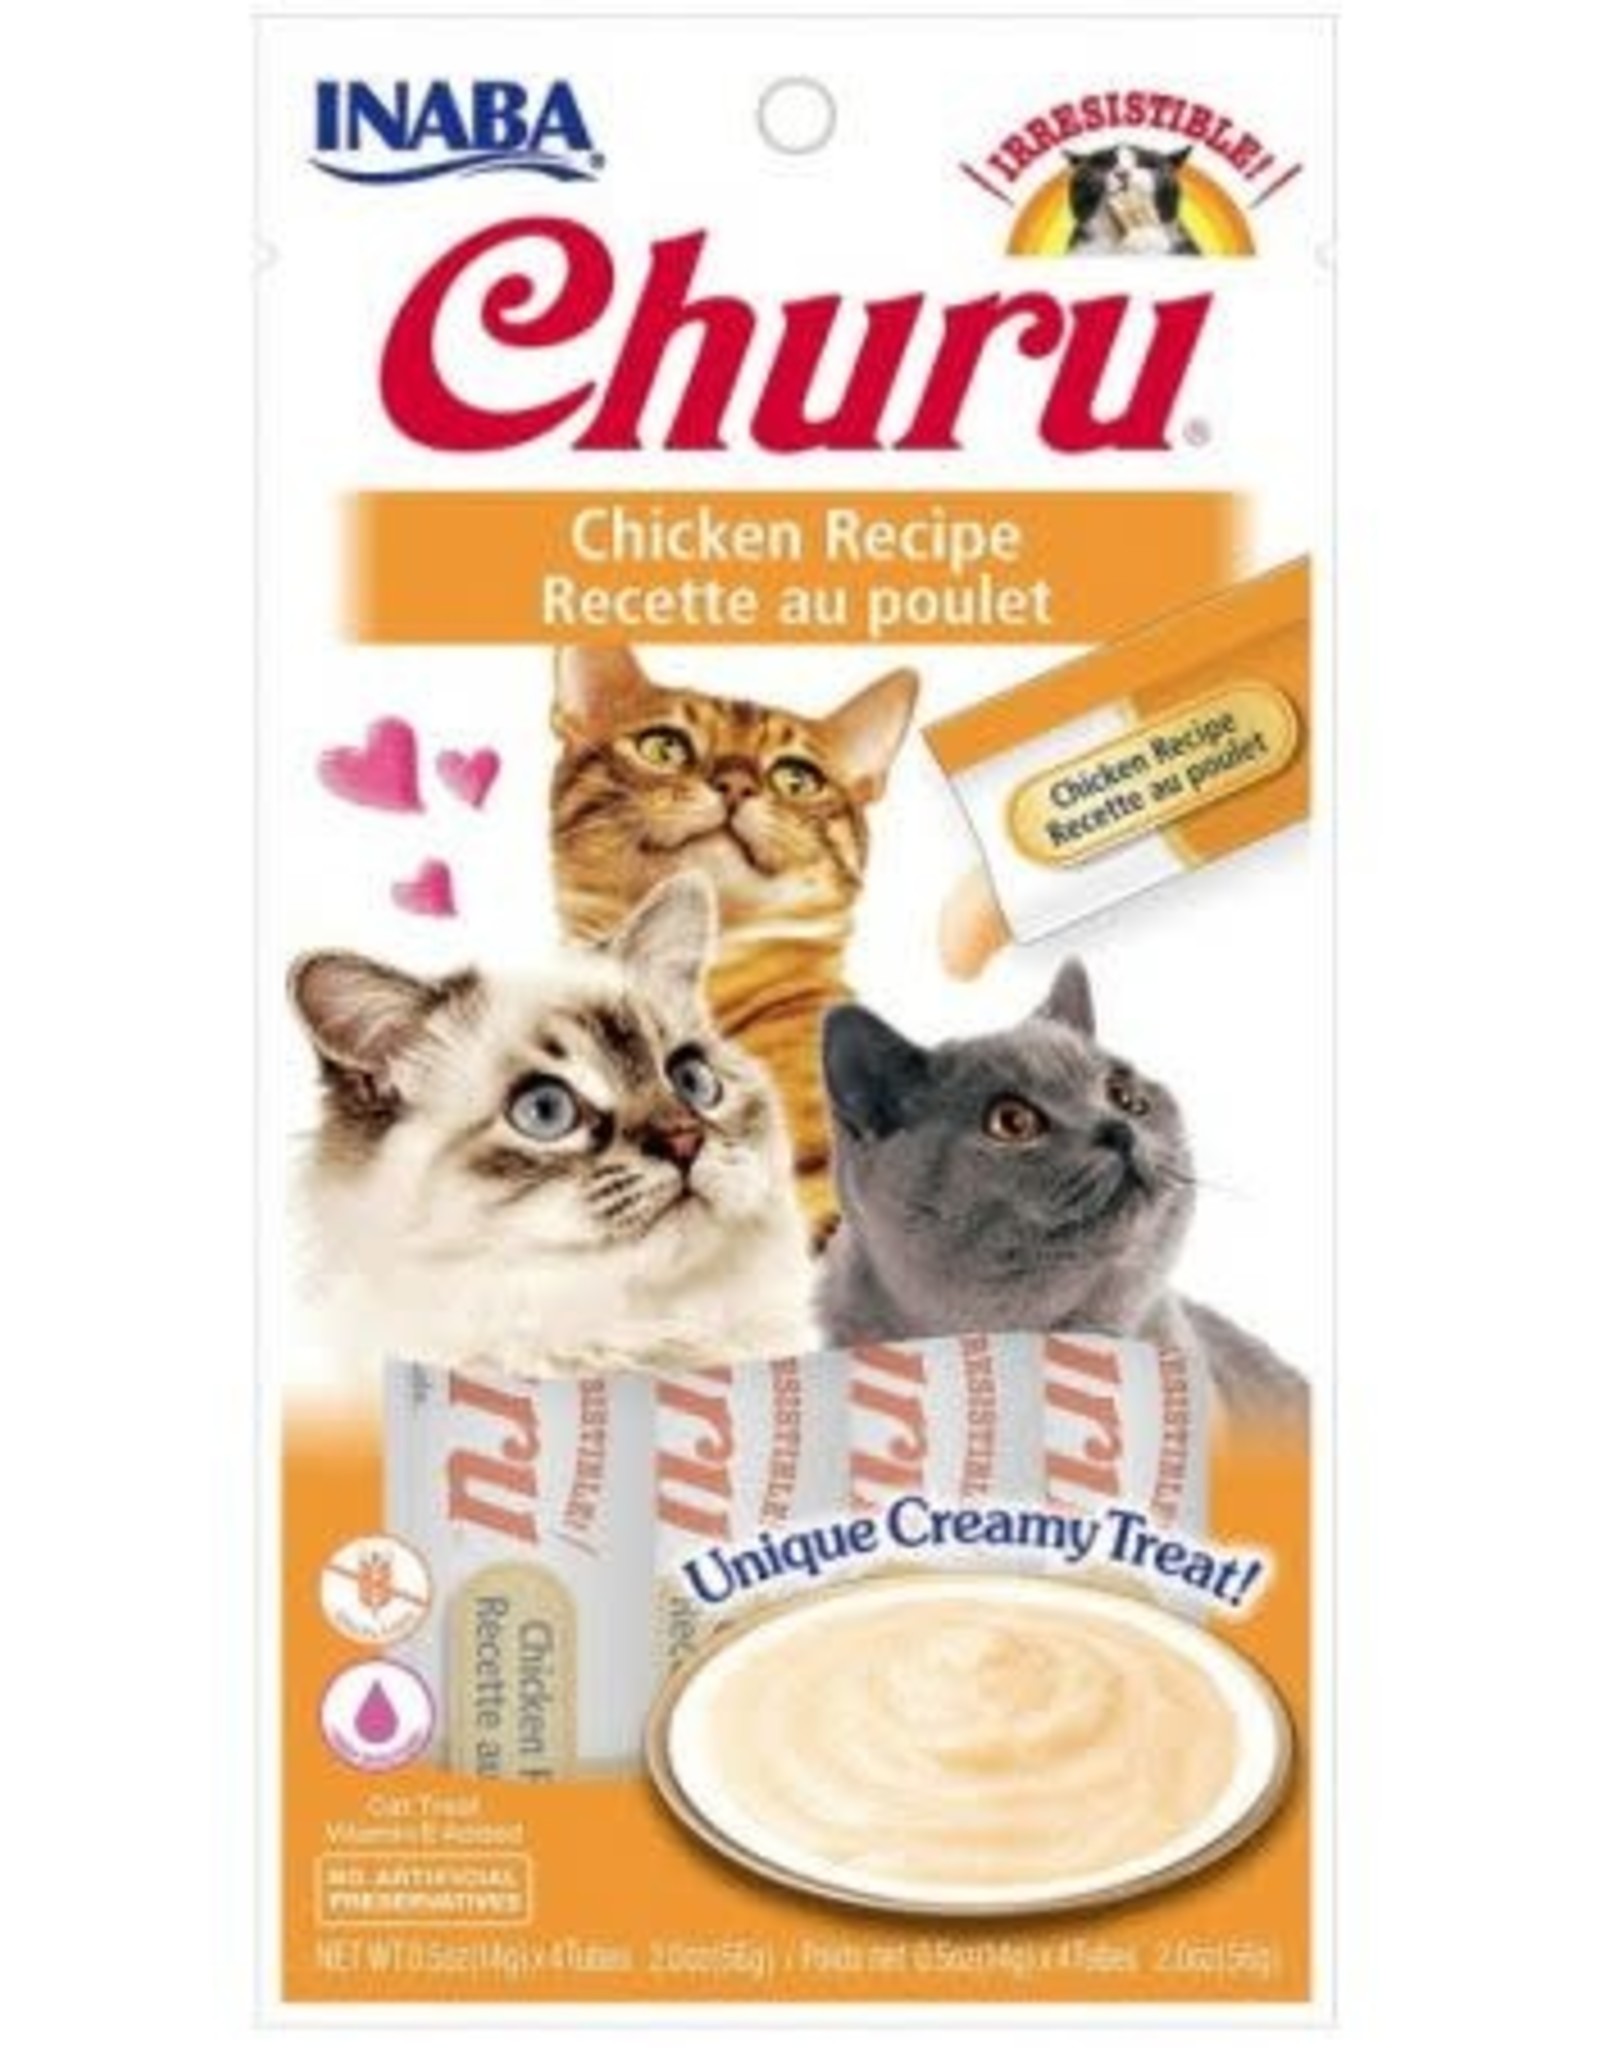 Inaba Inaba Churu Chicken Recipe 2 oz